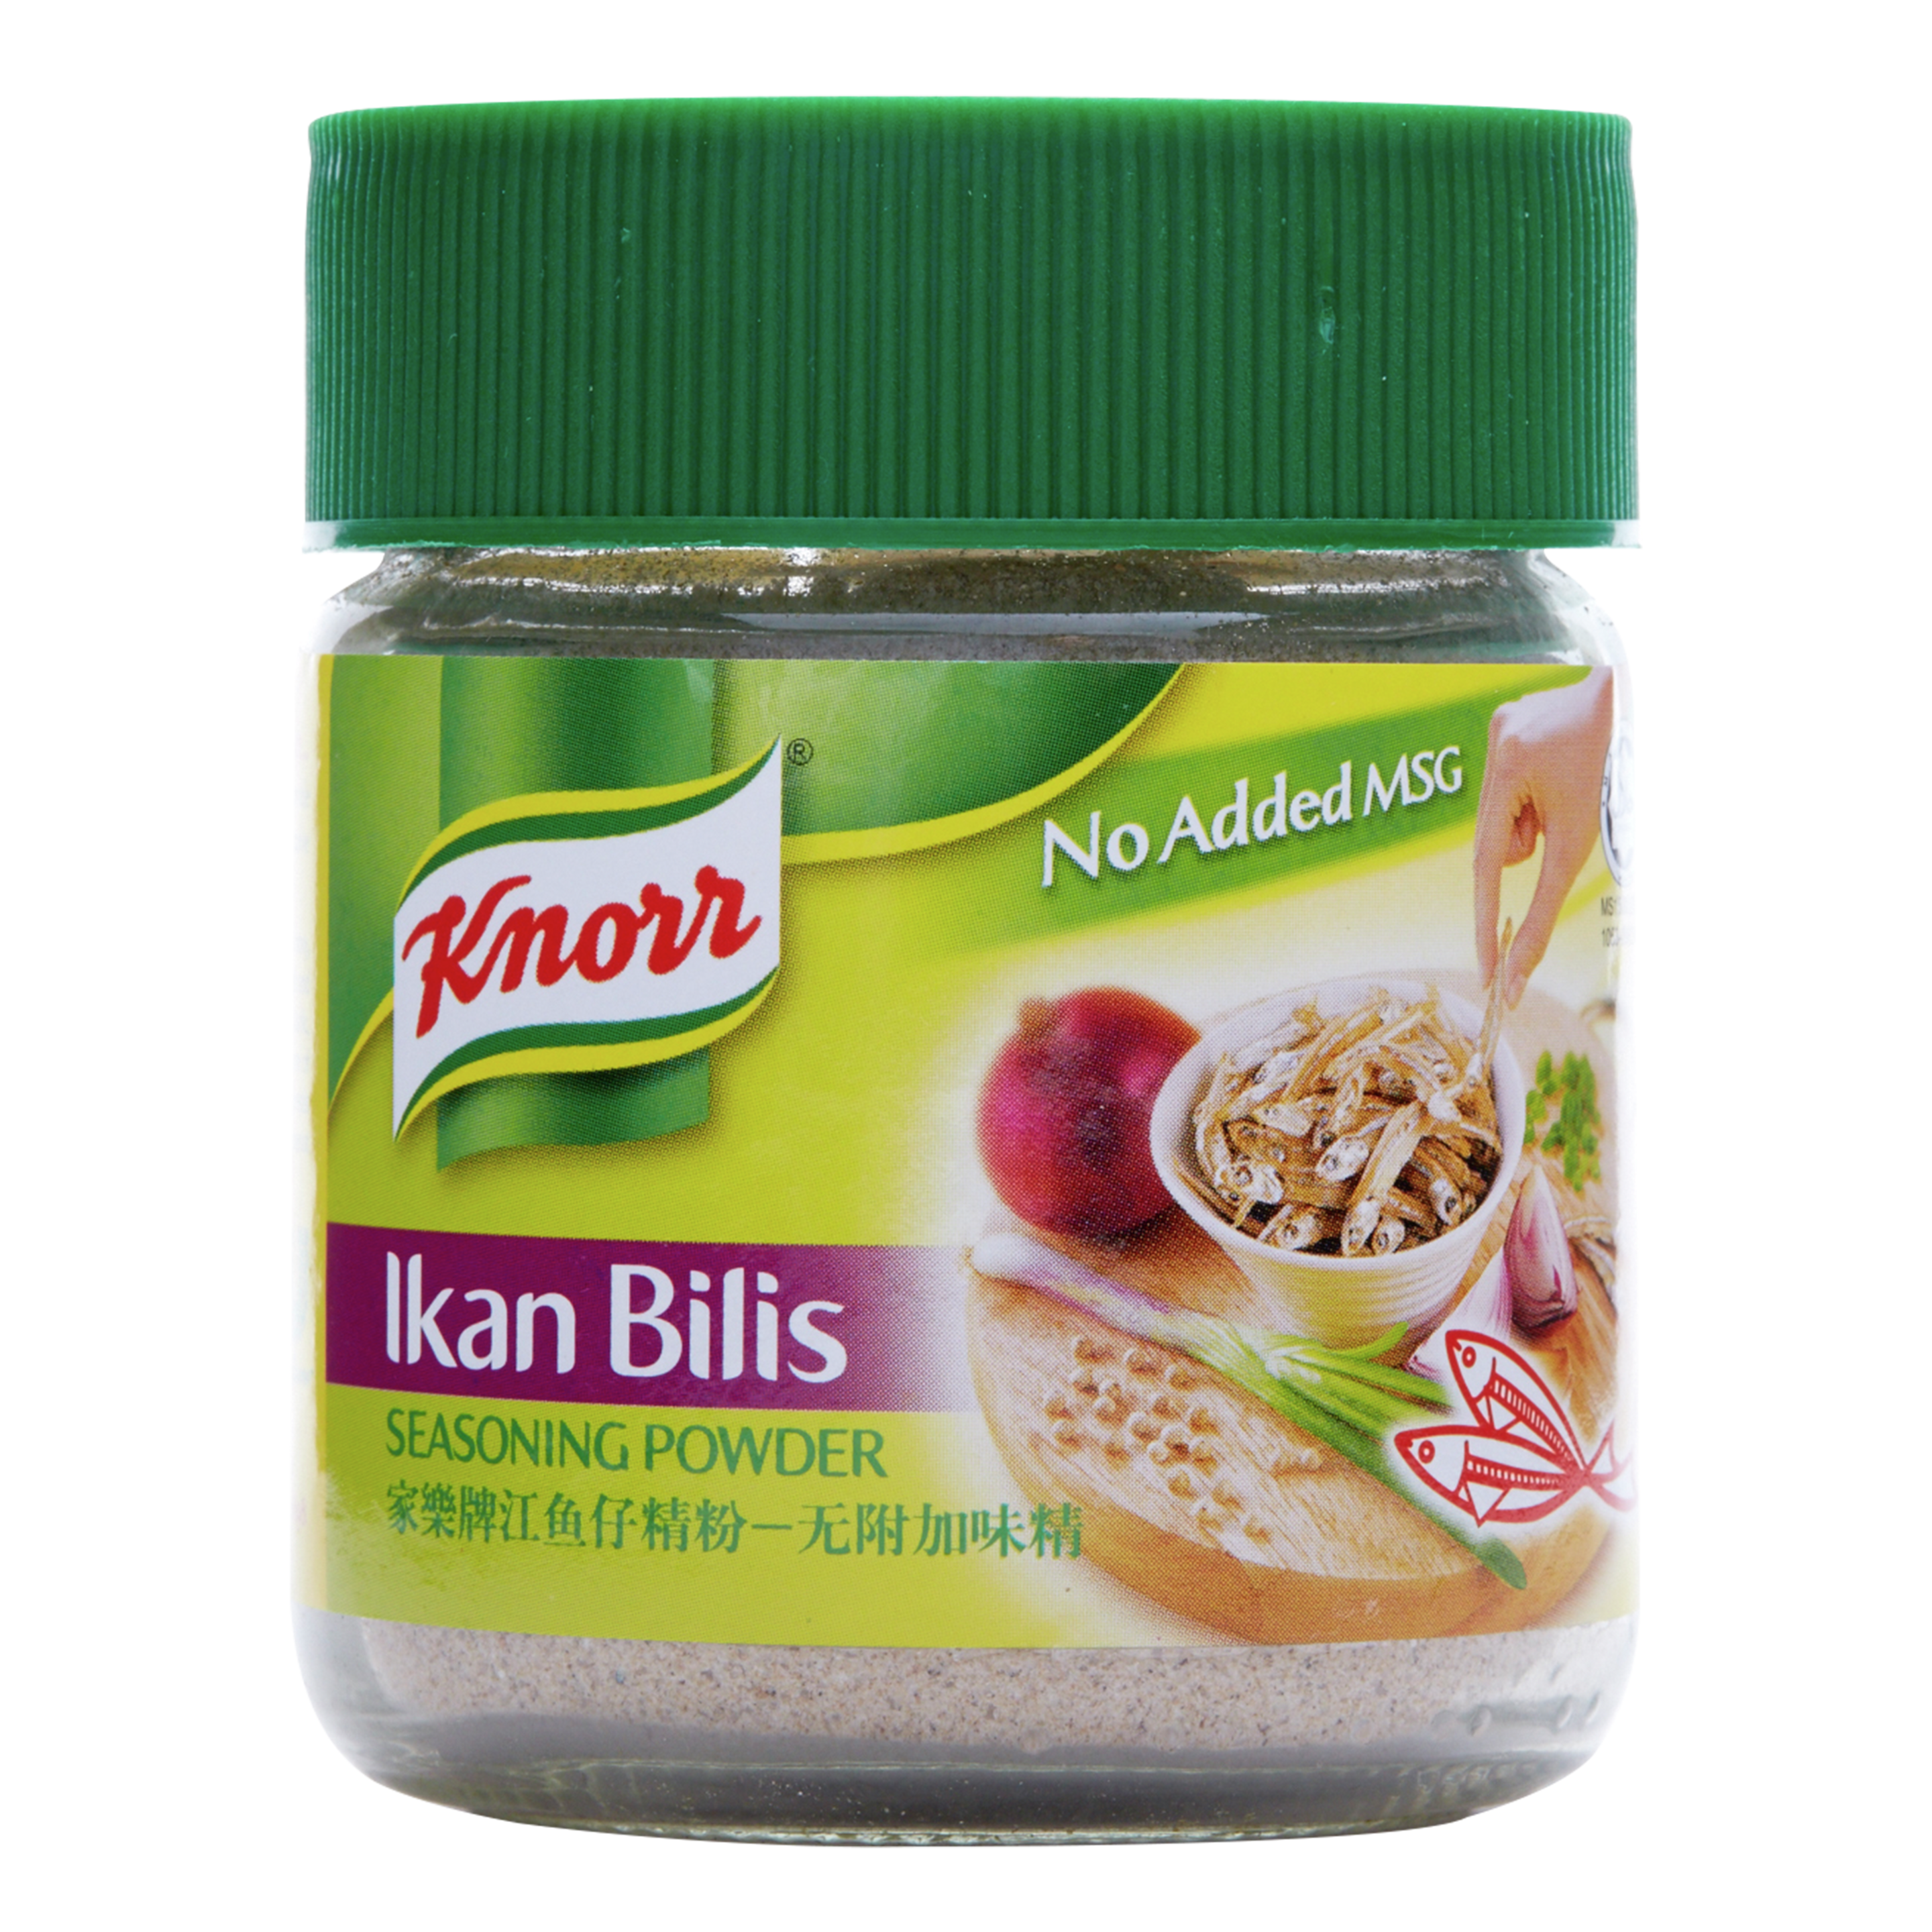 Knorr Ikan Bilis Powder (No Added MSG)